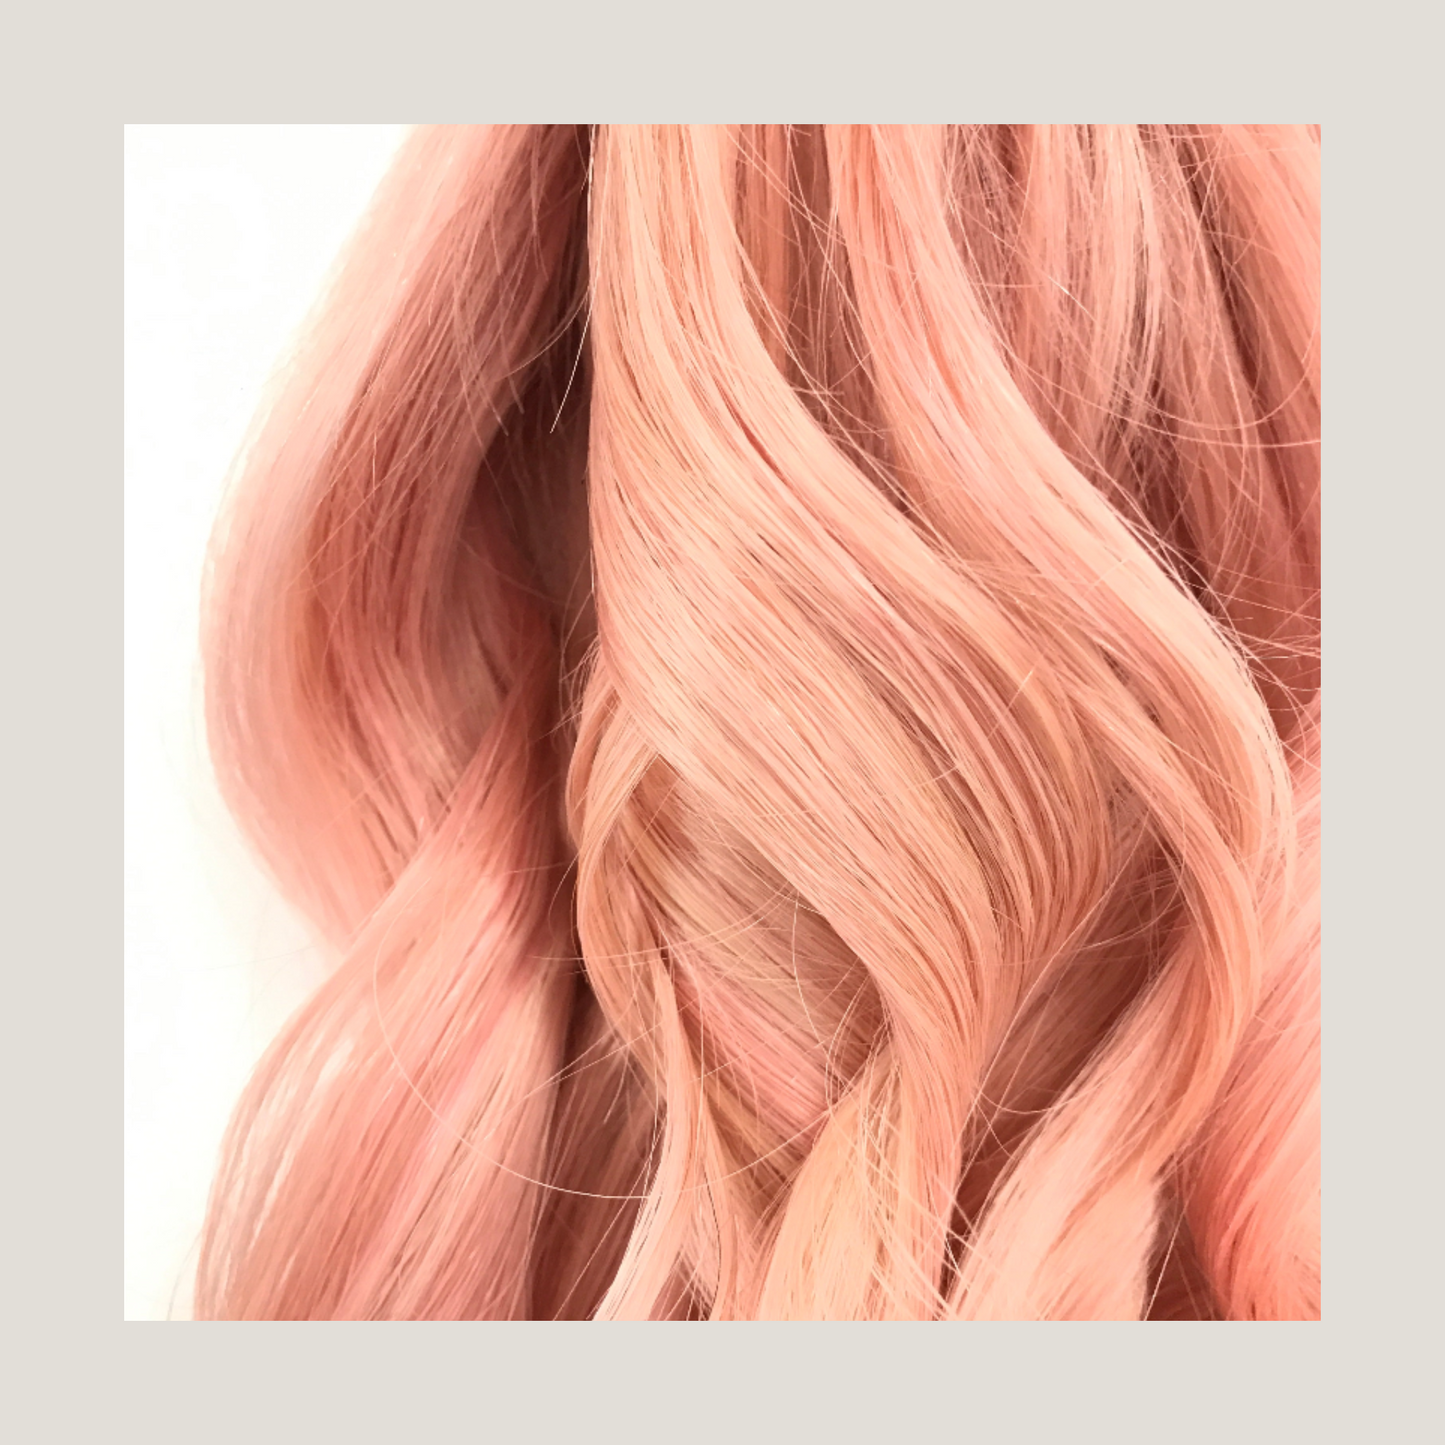 Rose Gold Hair Colour Hair Extensions, Brazilian & European Hair, Balayage